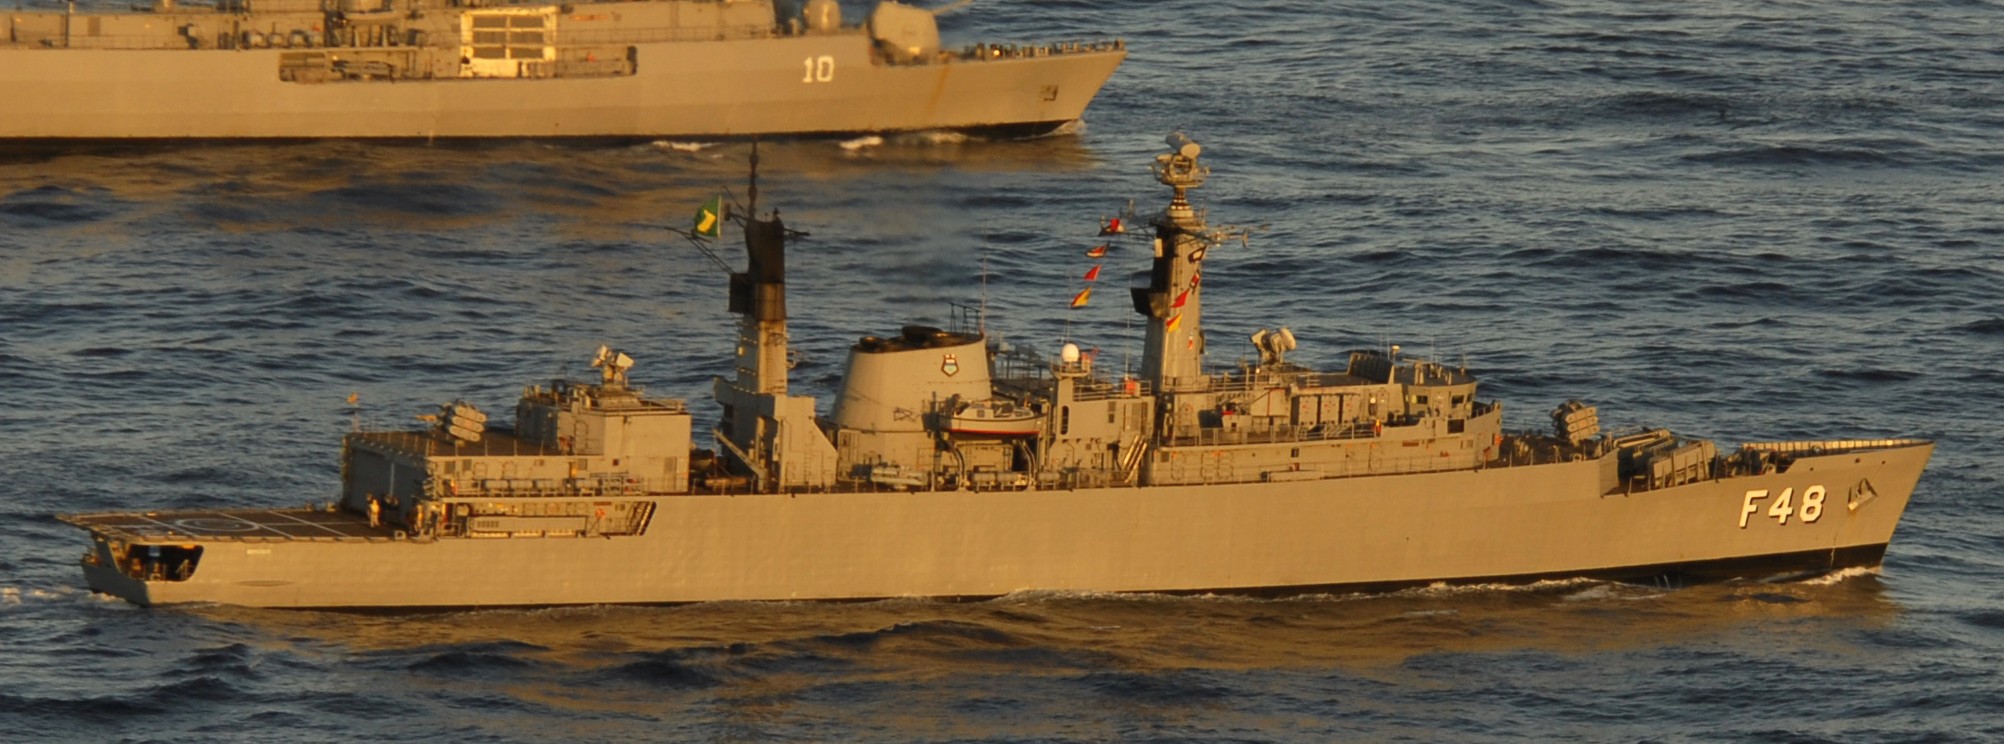 f 48 bns bosisio type 22 frigate brazilian navy ex hms brazen f 91